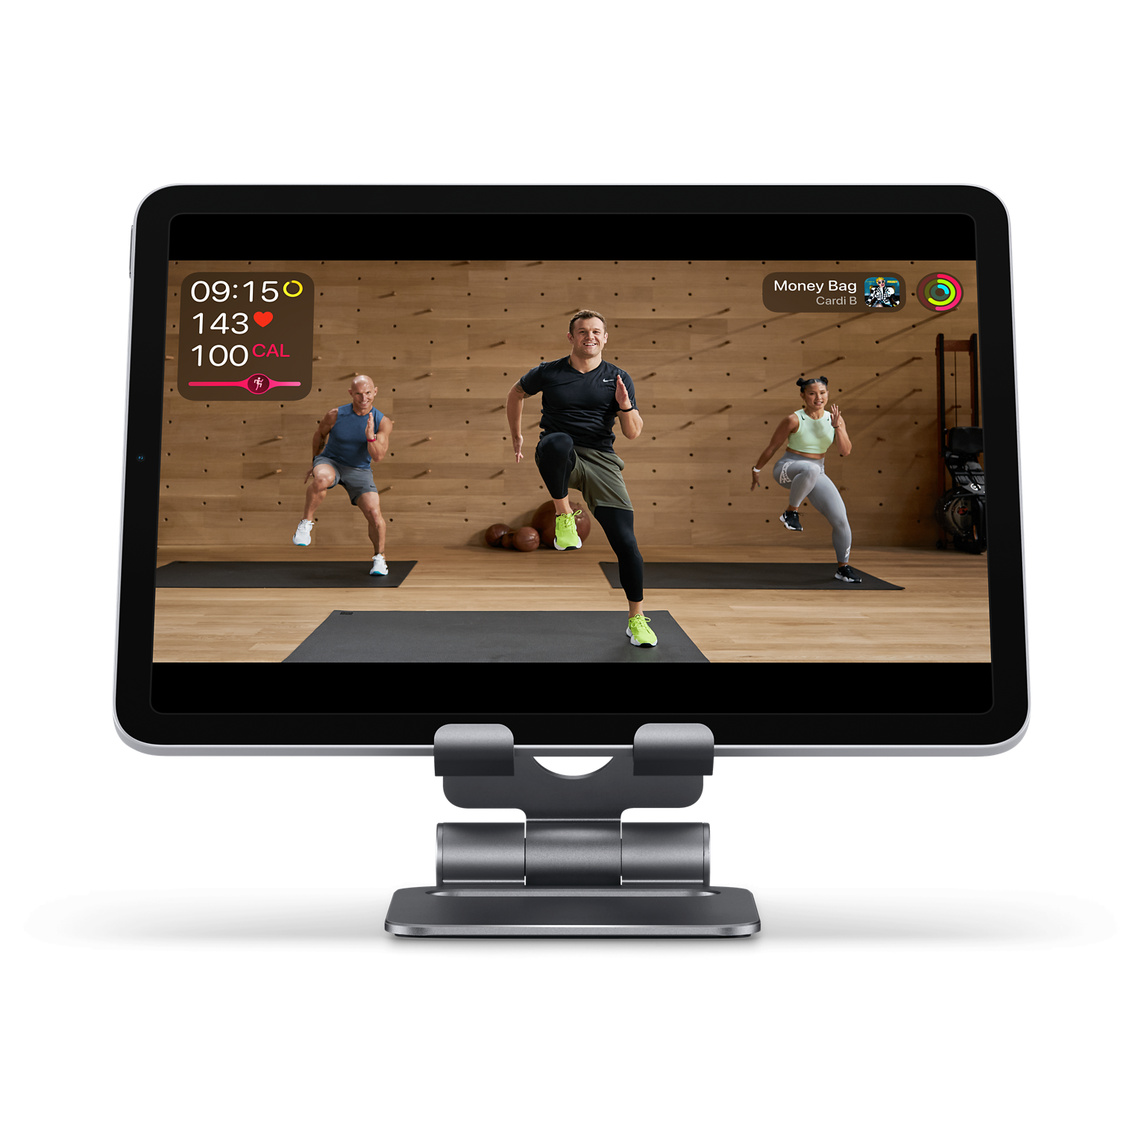 Satechi Foldable Aluminum Stand는 운동 영상을 보거나 FaceTime 통화를 할 때 iPhone 또는 iPad를 안정적으로 잡아줍니다.